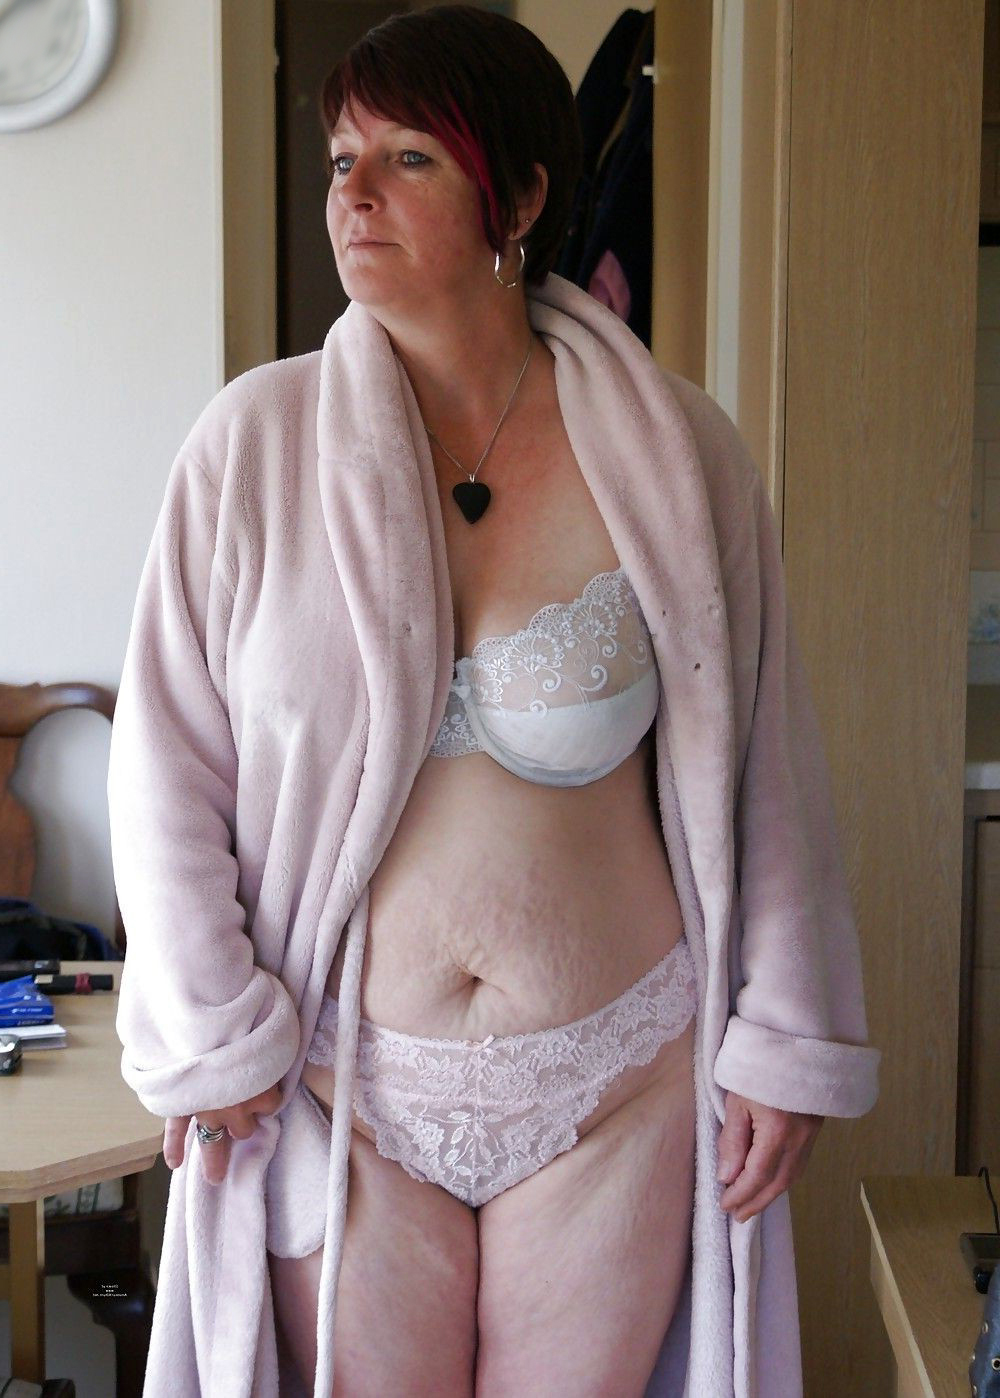 Elegant Mature Upskirt - Elegant mature women in lingerie - MatureHomemadePorn.com